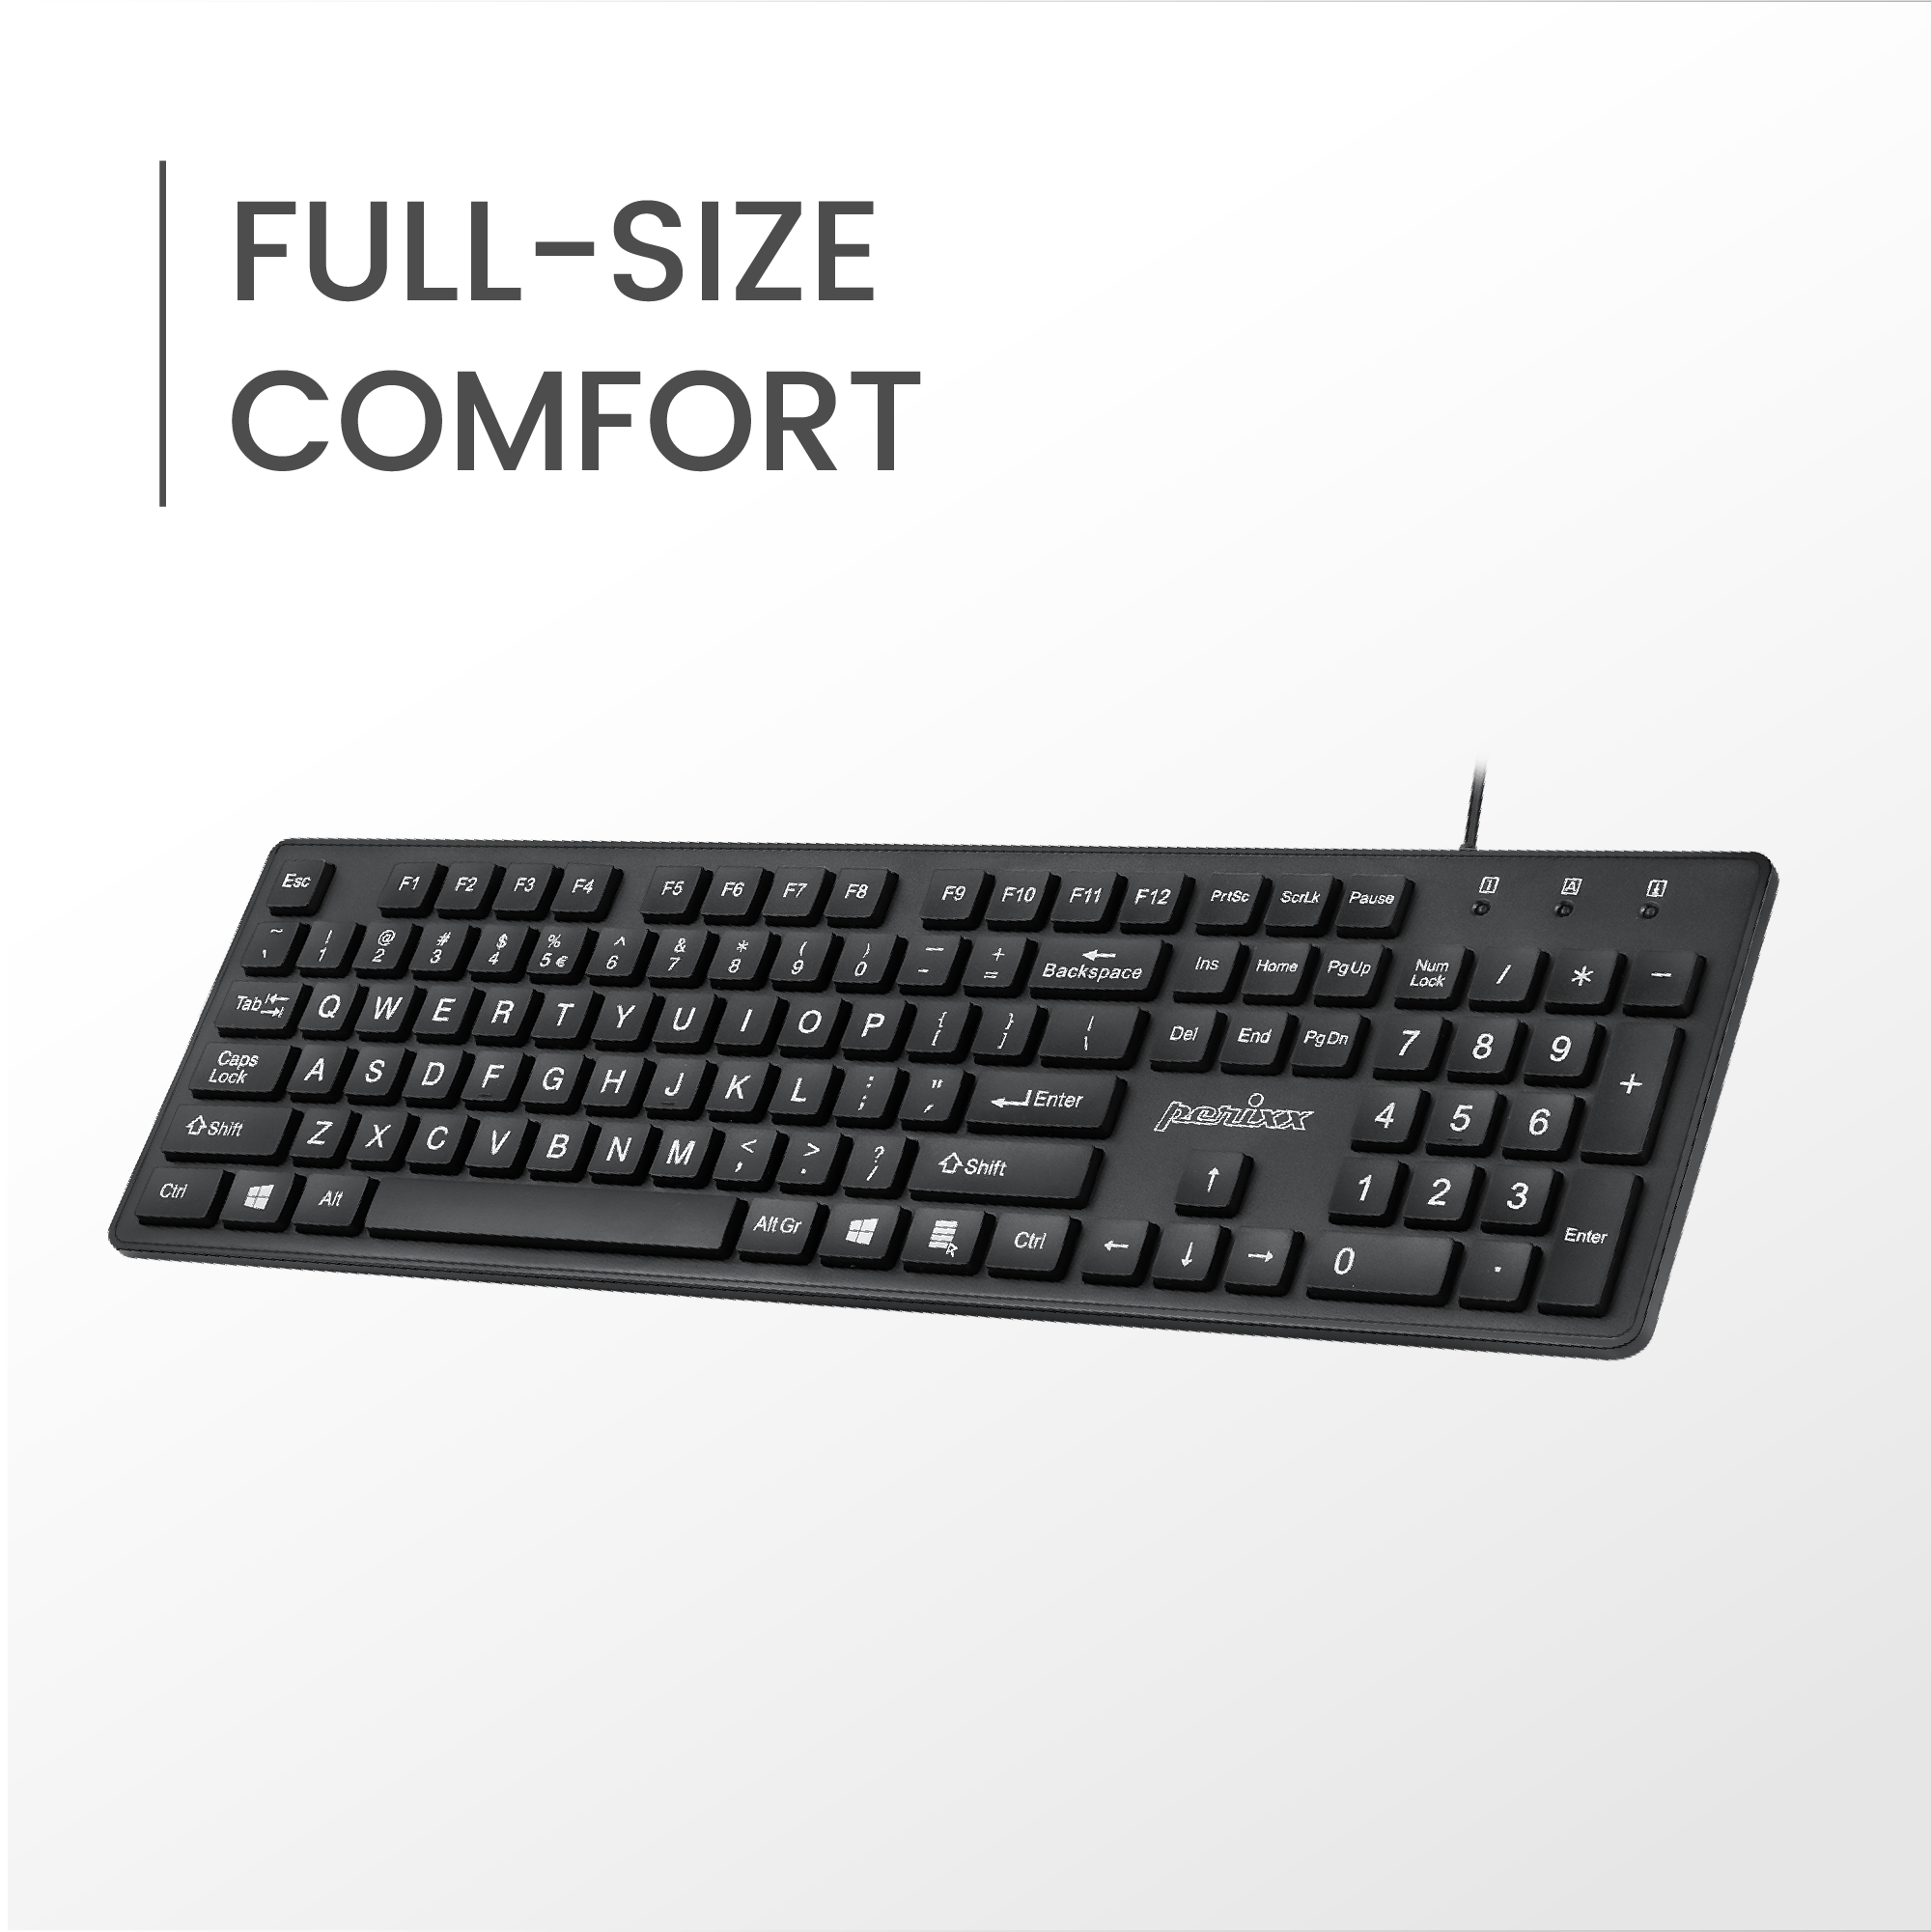 Full-Size Comfort